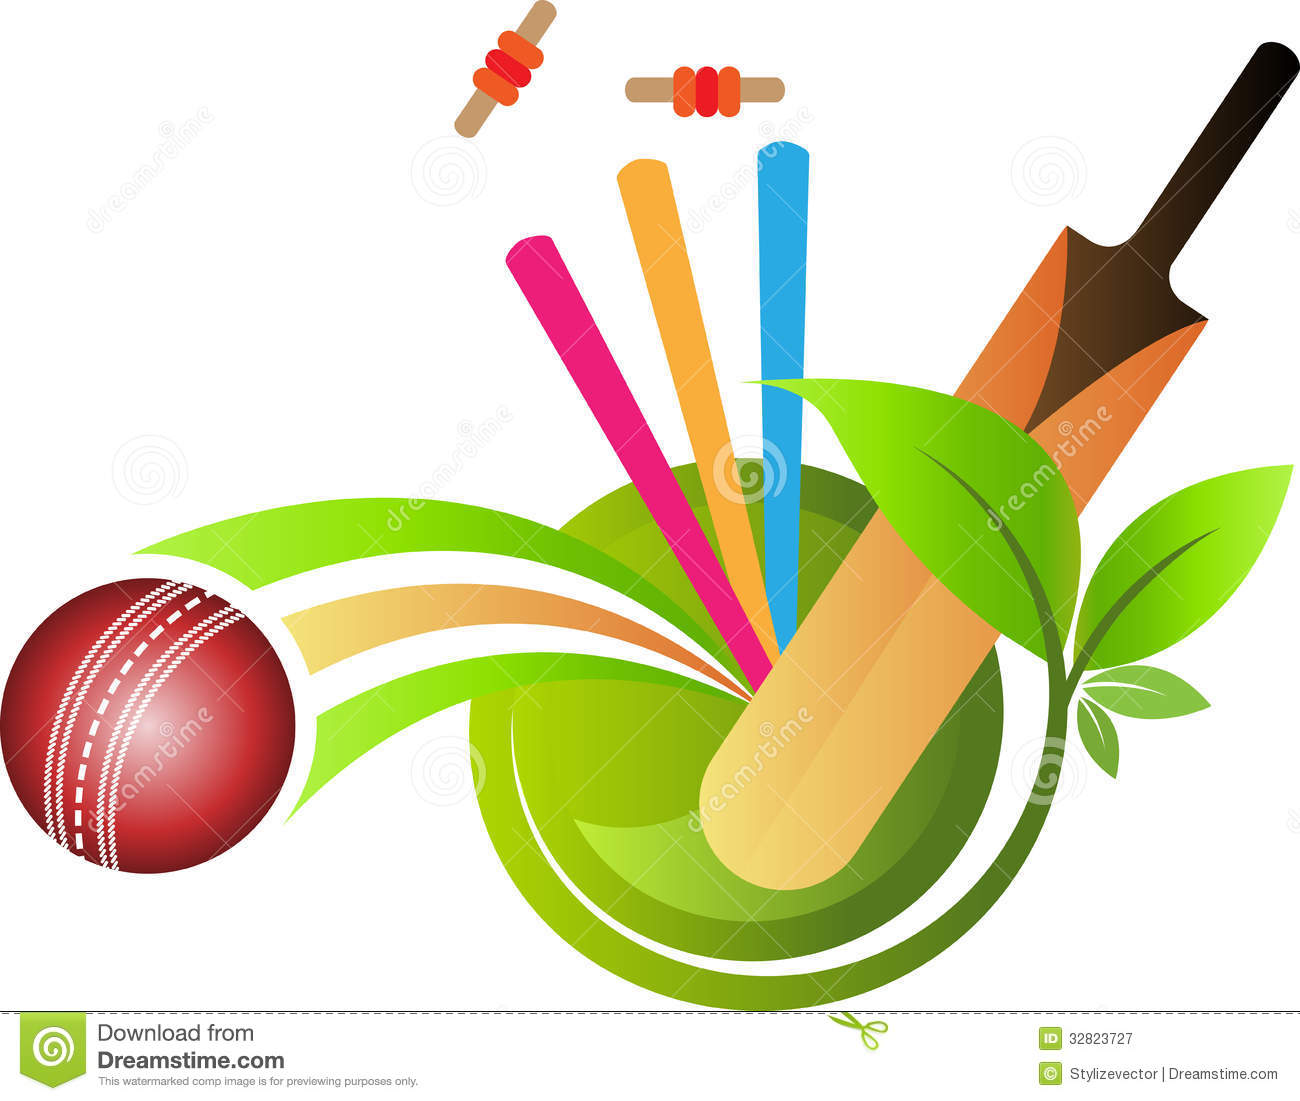 cricket logo clipart - photo #28